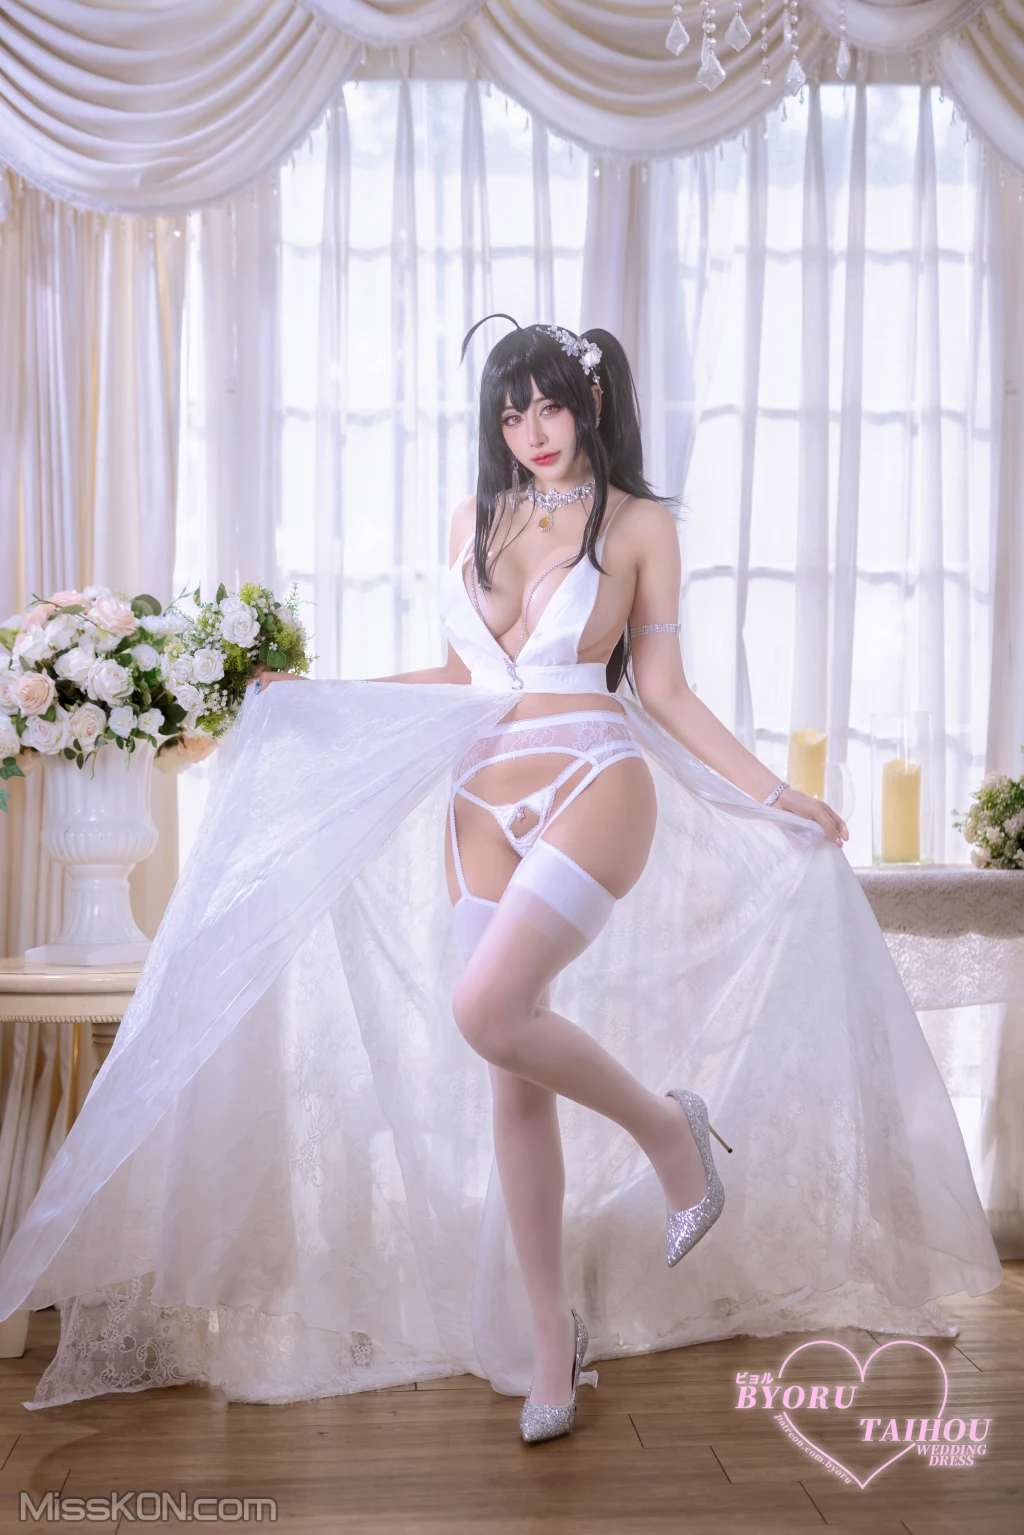 Coser@Byoru: Taihou Wedding Dress (52 photos )  photo 1-11